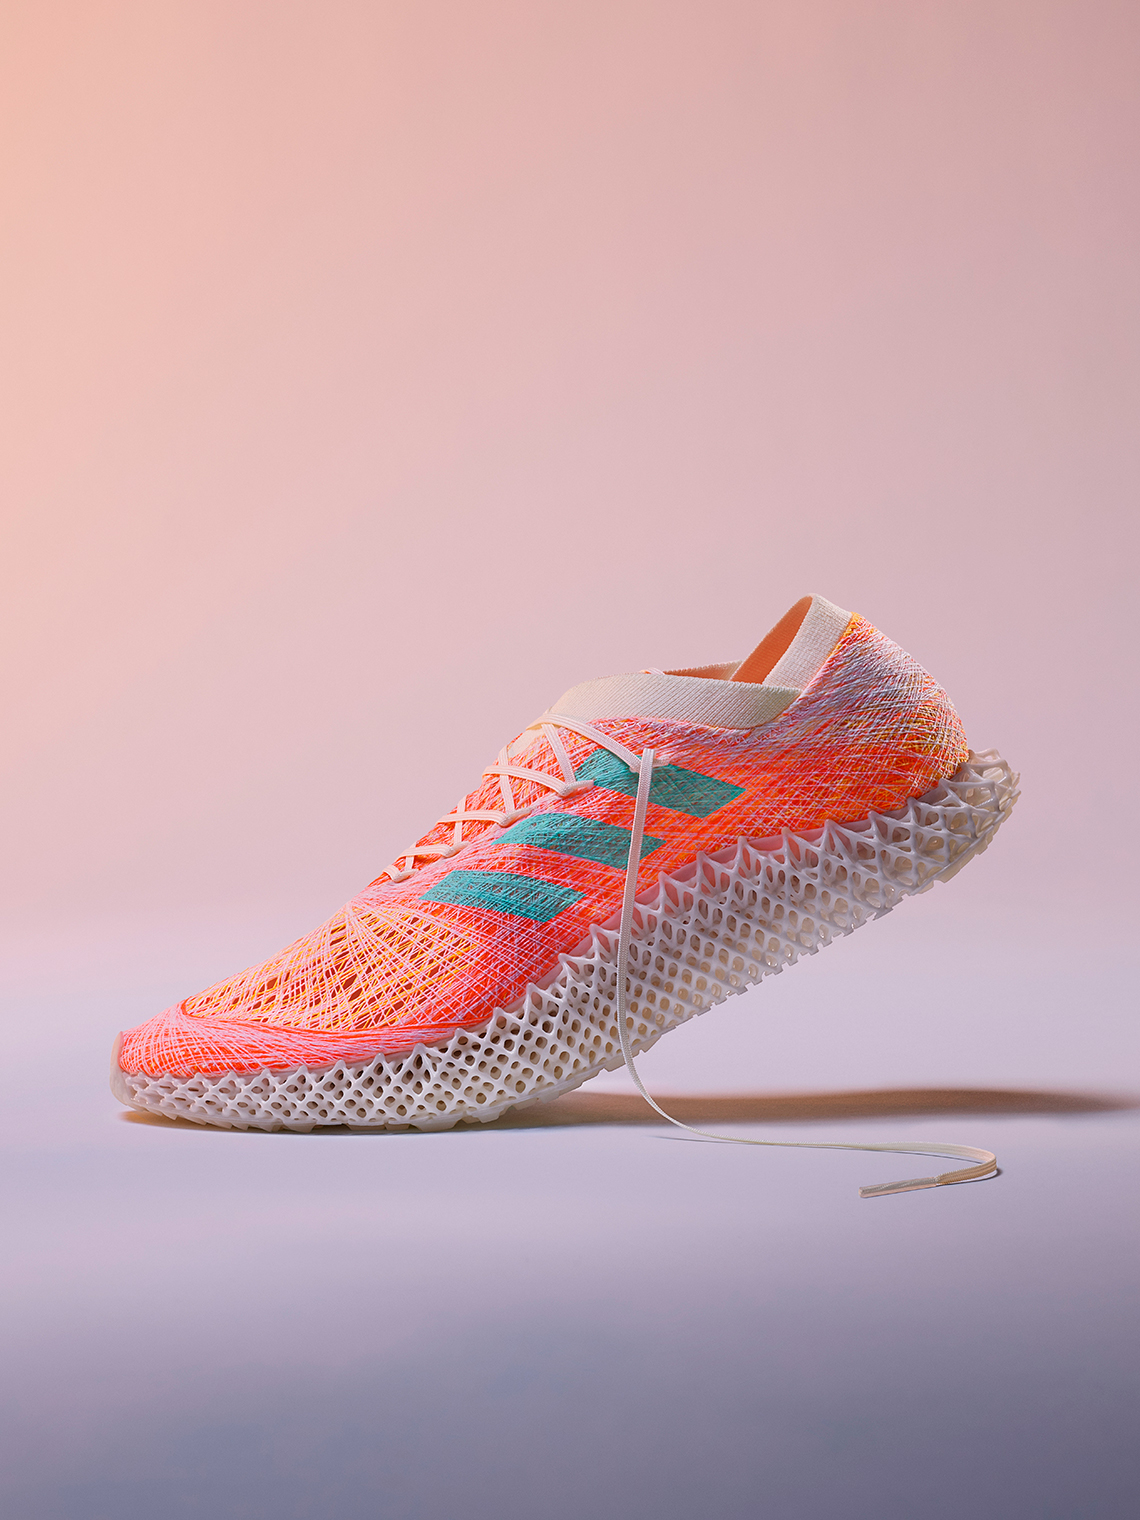 Adidas Futurecraft Strung Shoe Gallery 1